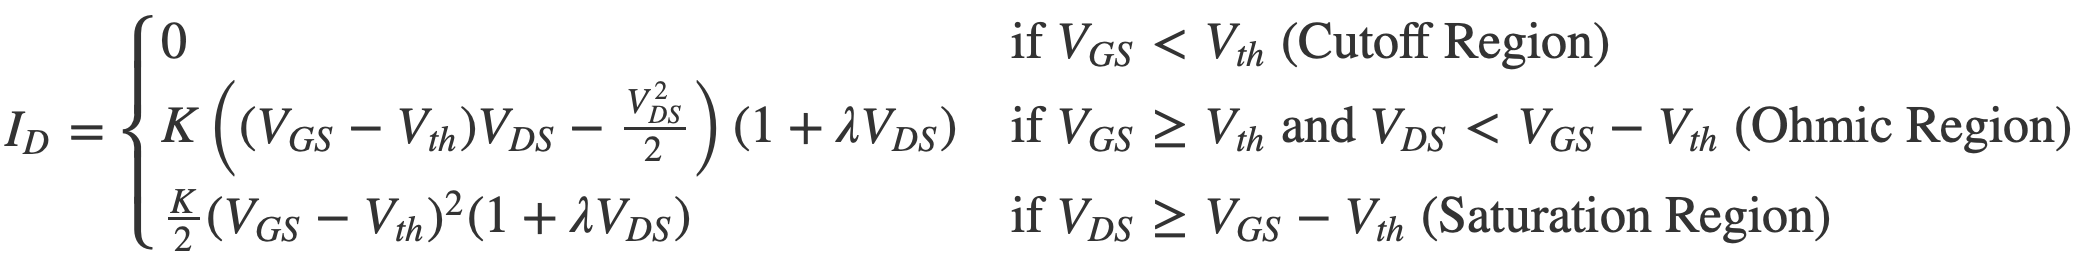 PWLMOSFET Equation